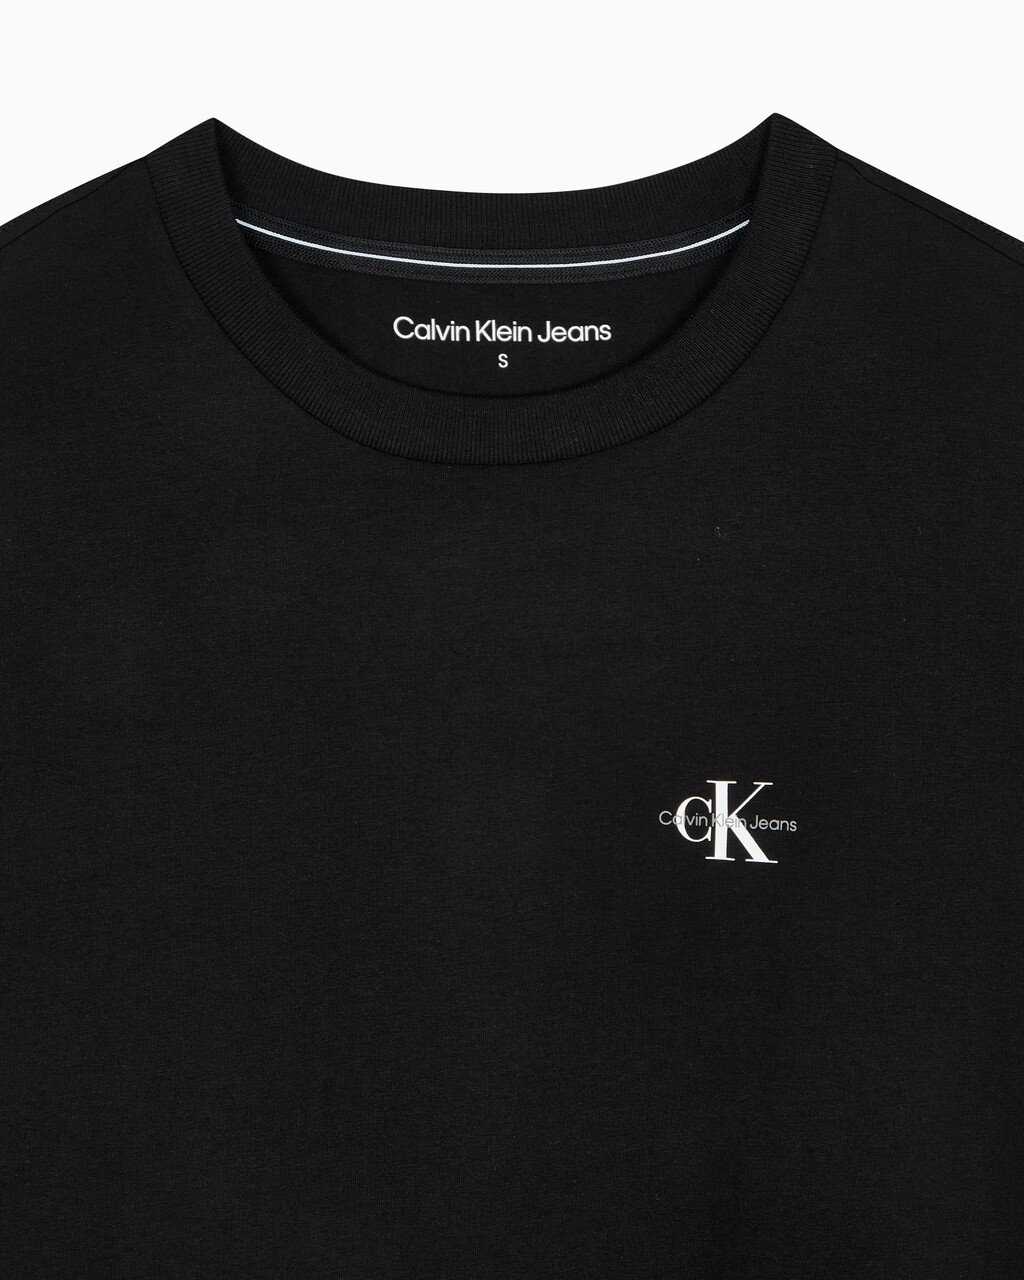 Buy 여성 레귤러핏 모던로고 2PK 반팔 티셔츠 in color CK BLACK